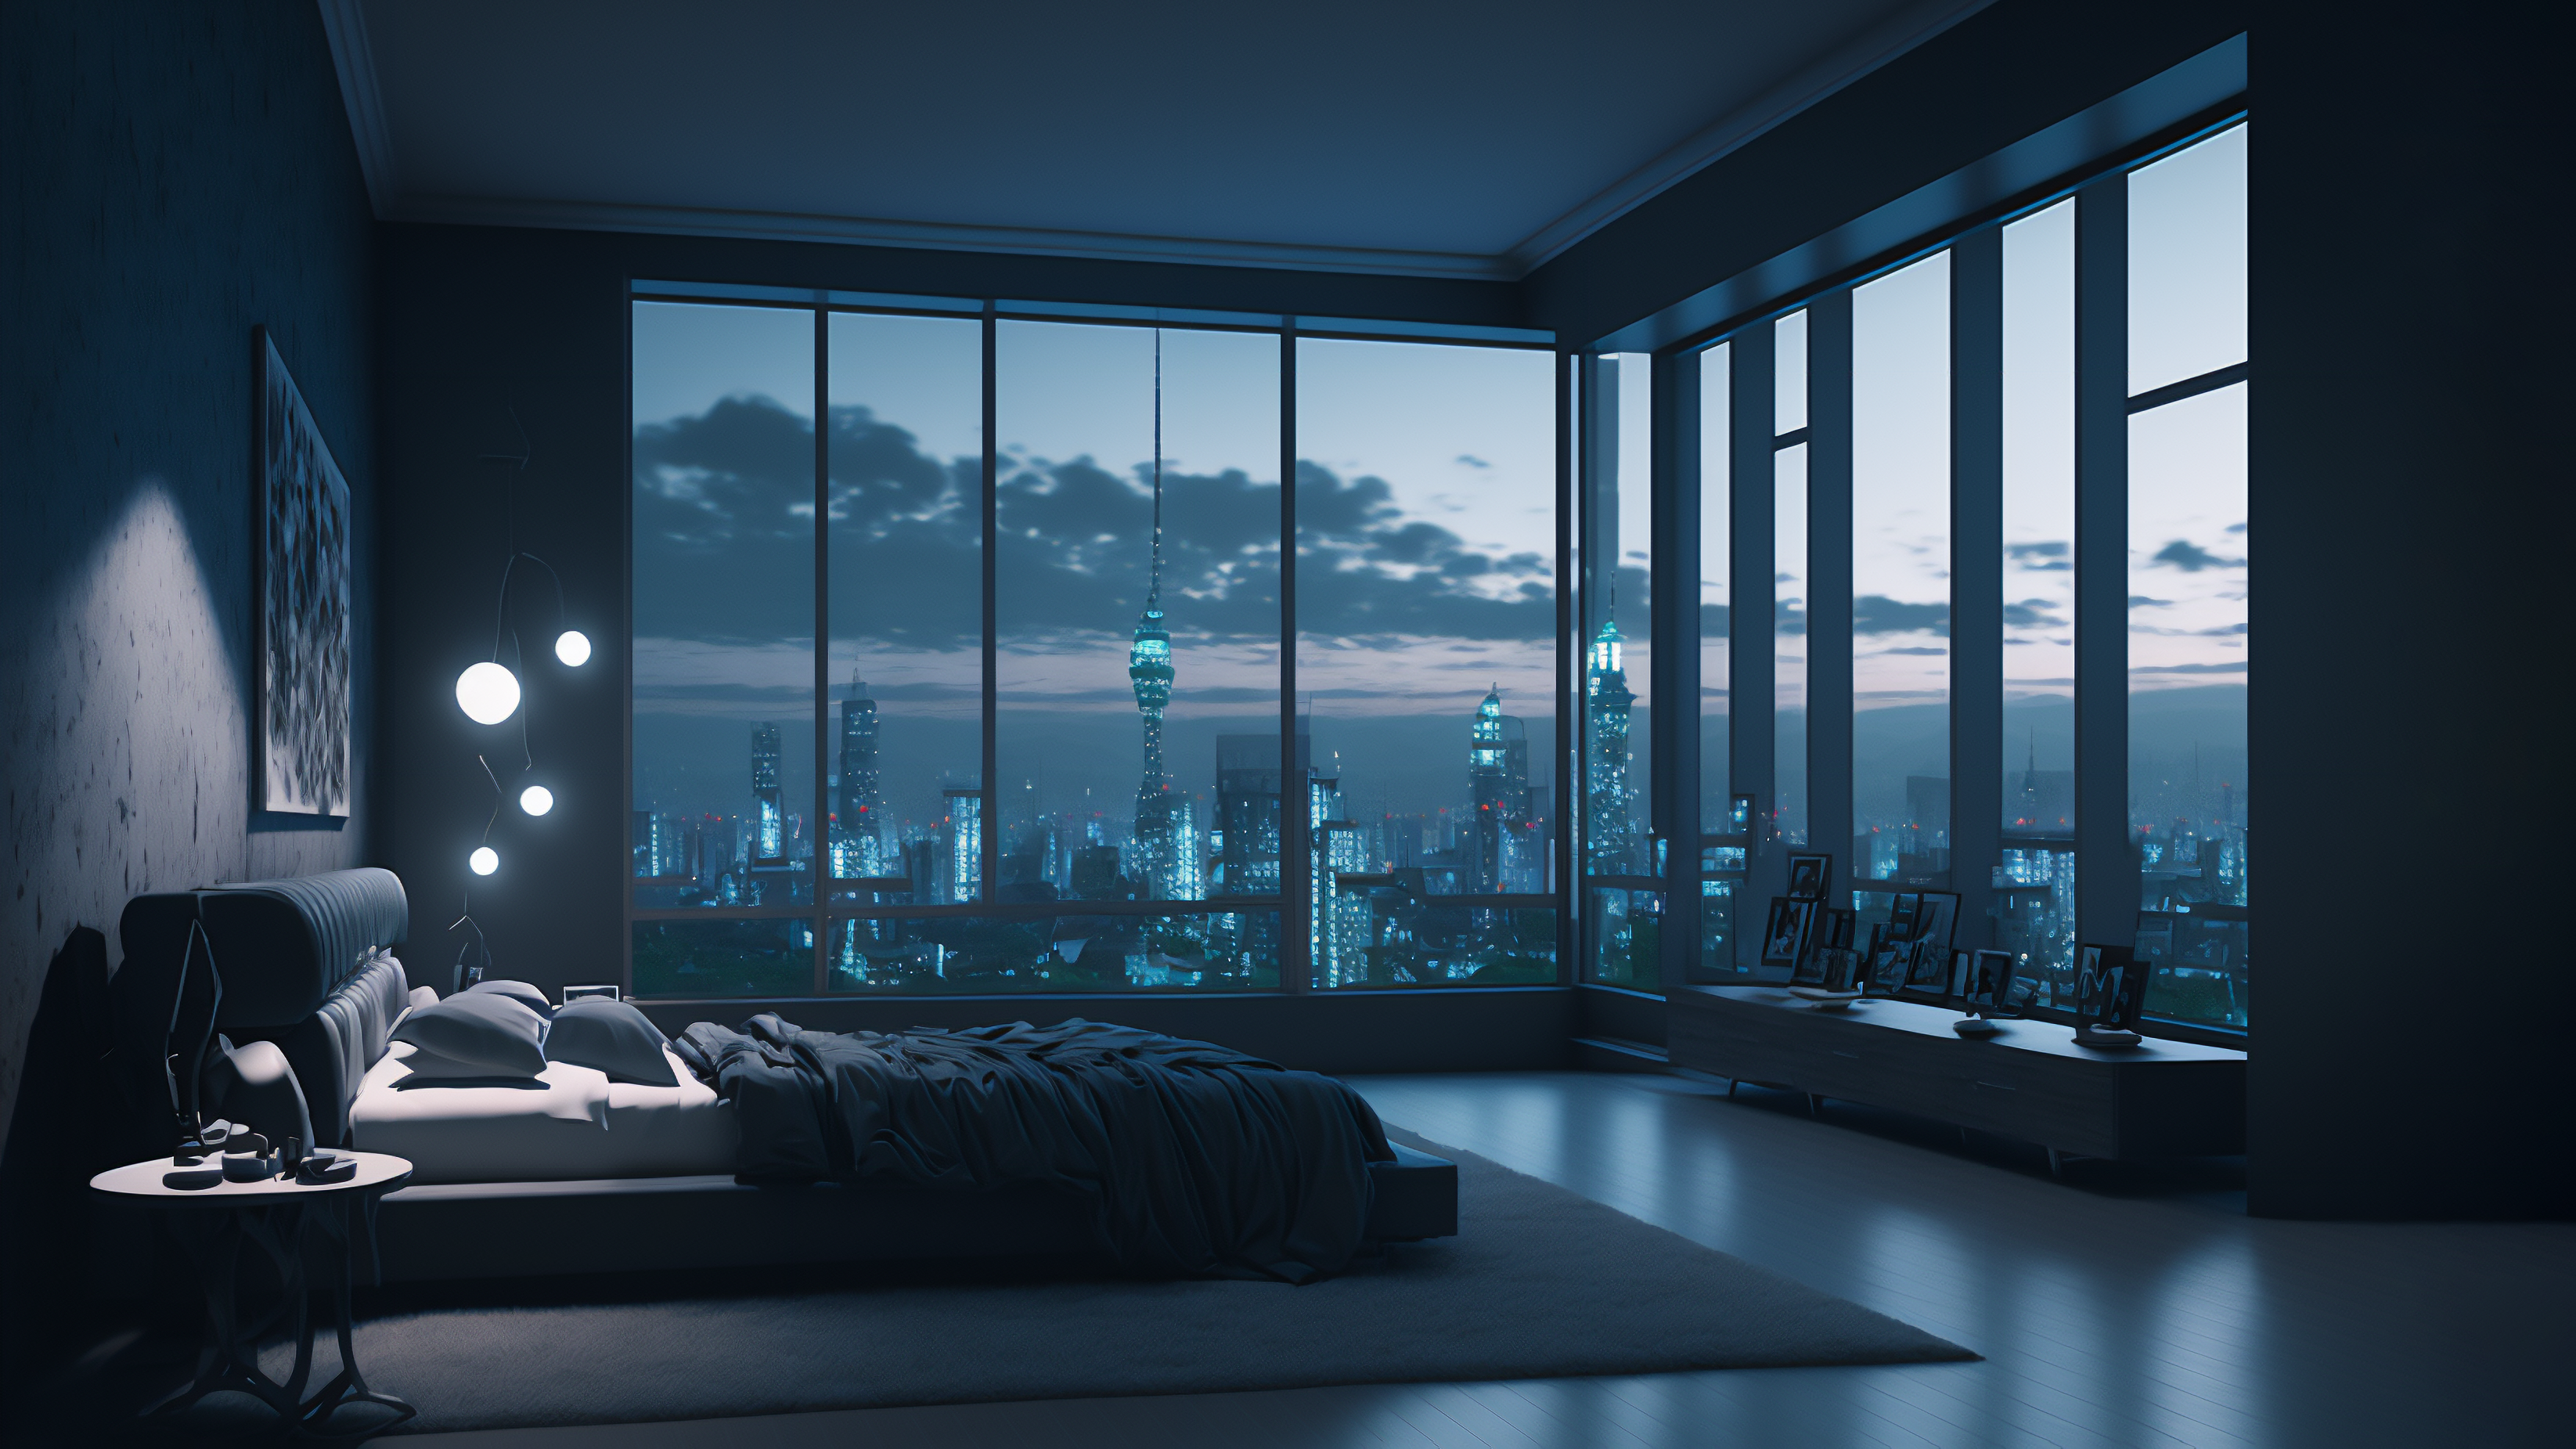 General 3291x1851 interior Blue hour AI art bed bedroom sky clouds city building skyscraper city lights lamp